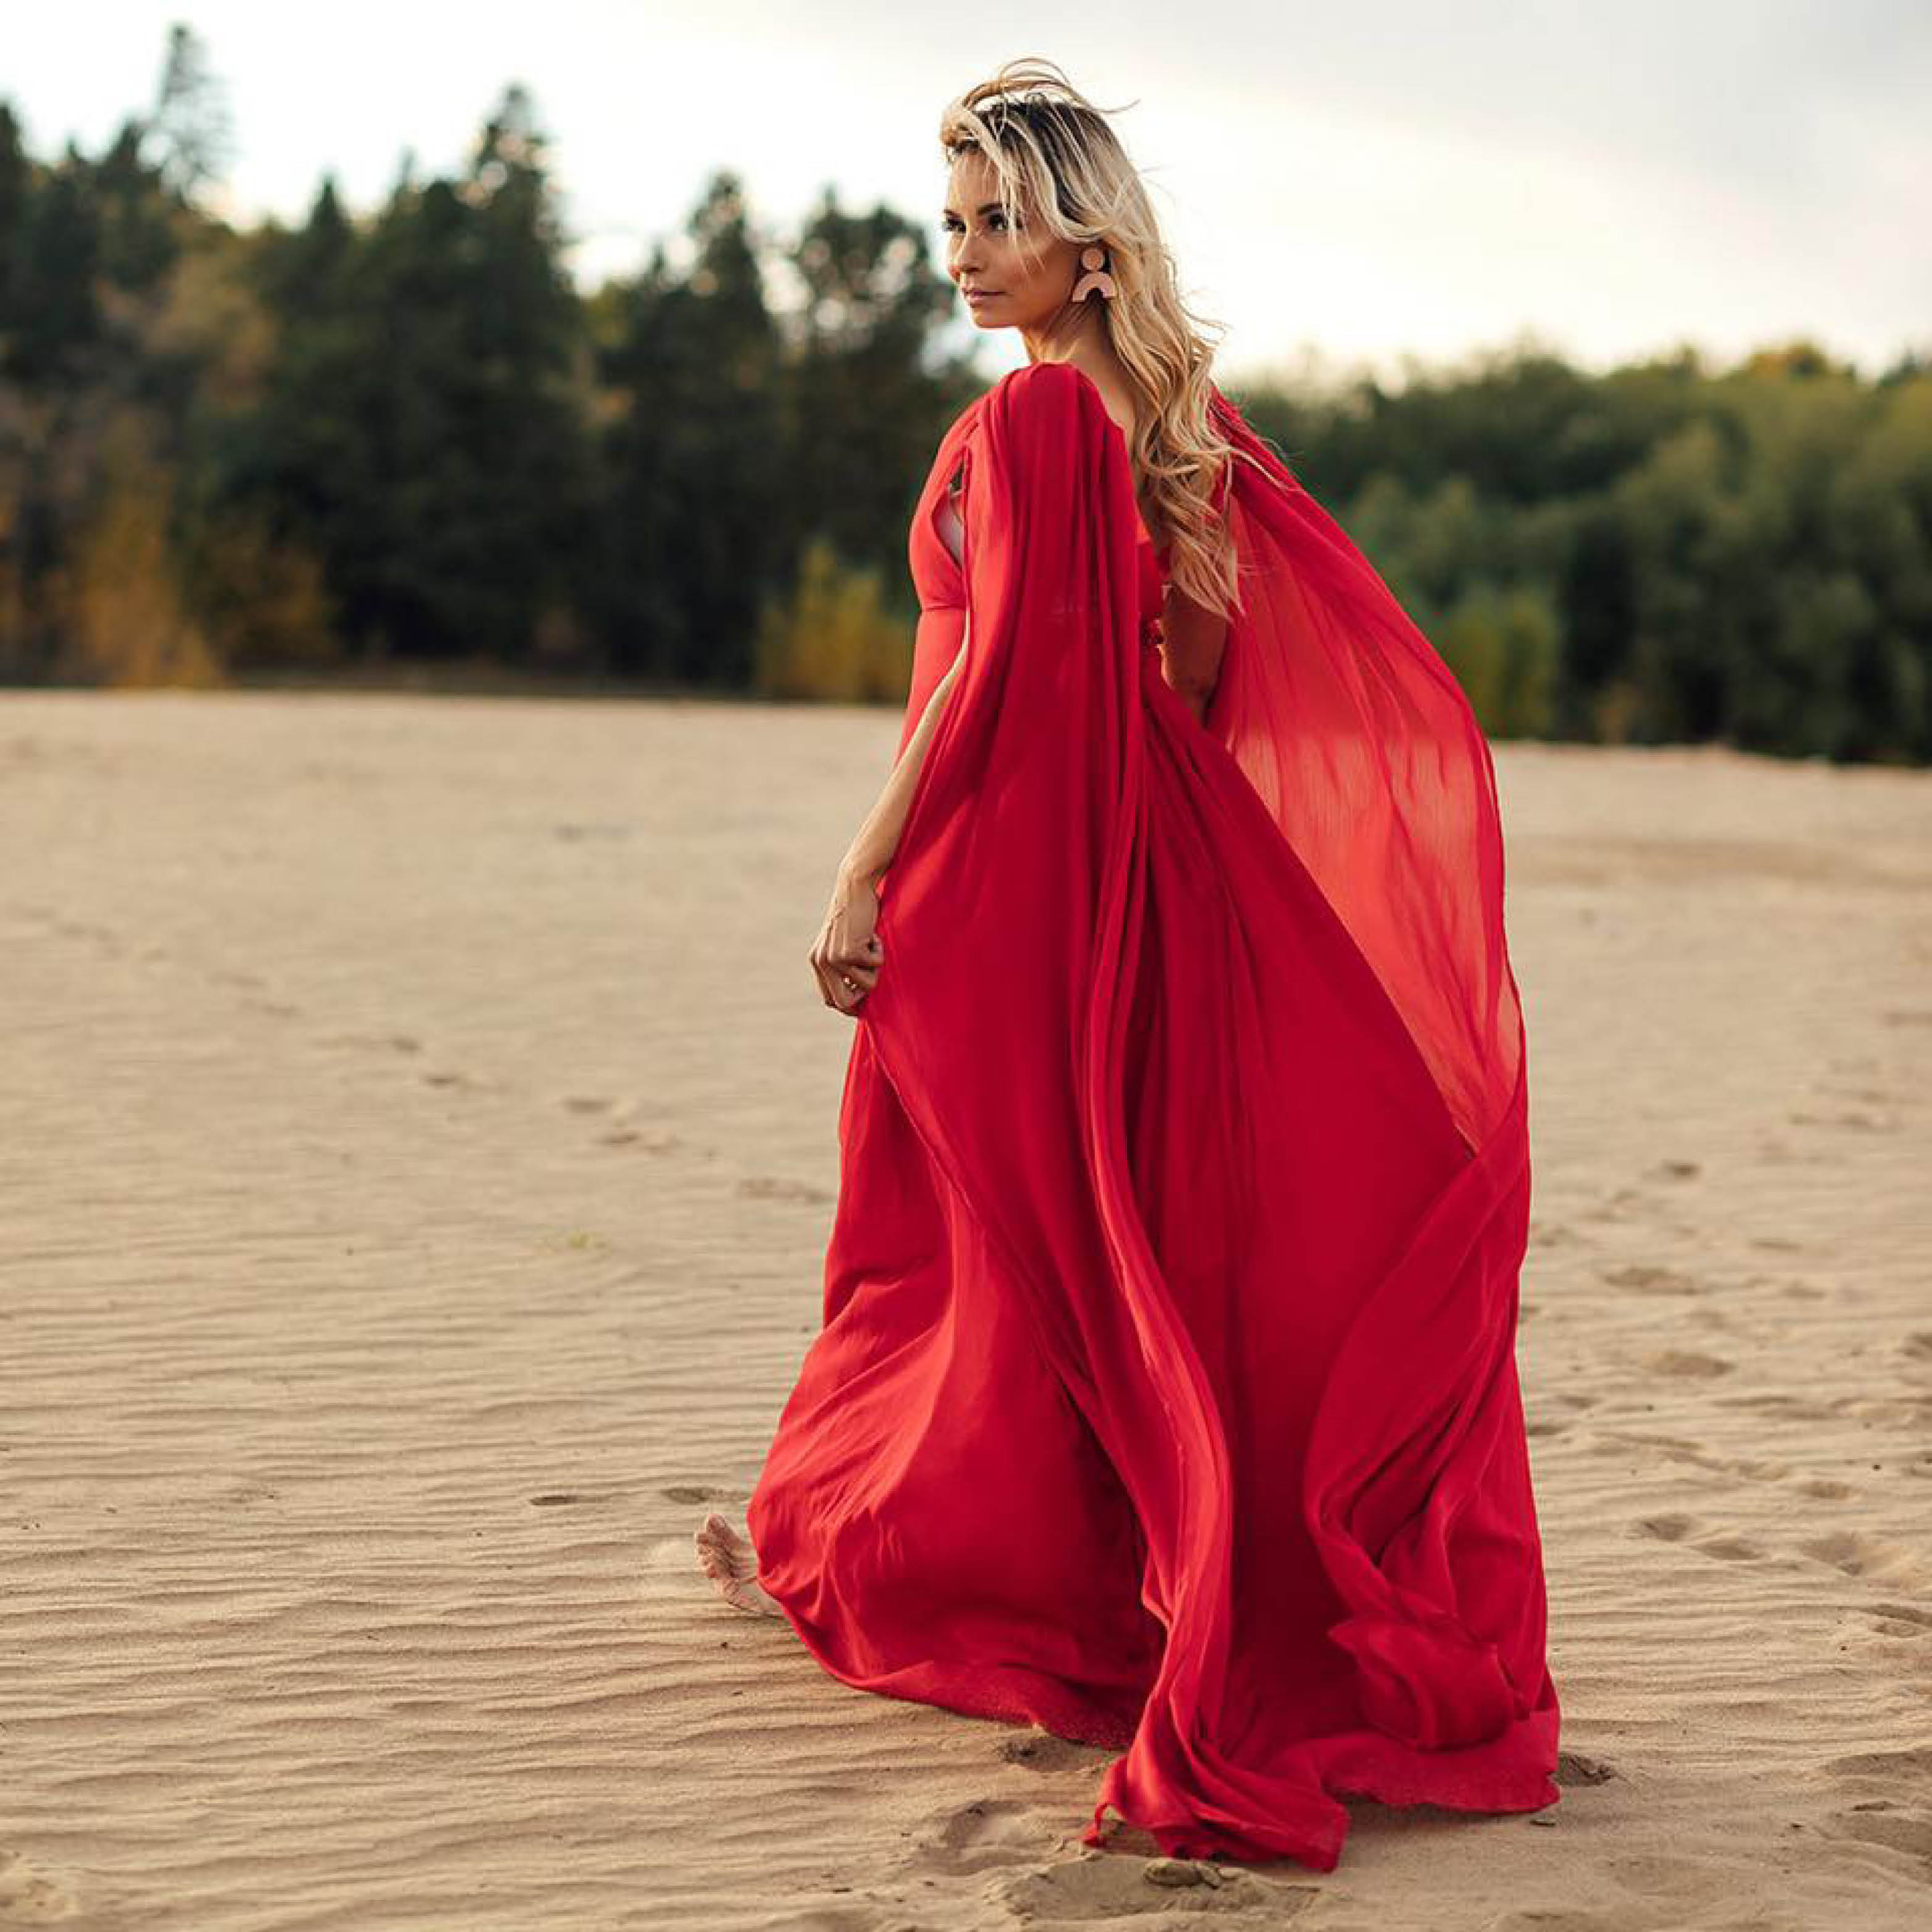 Heather Bouchier Designs red dress in the desert.